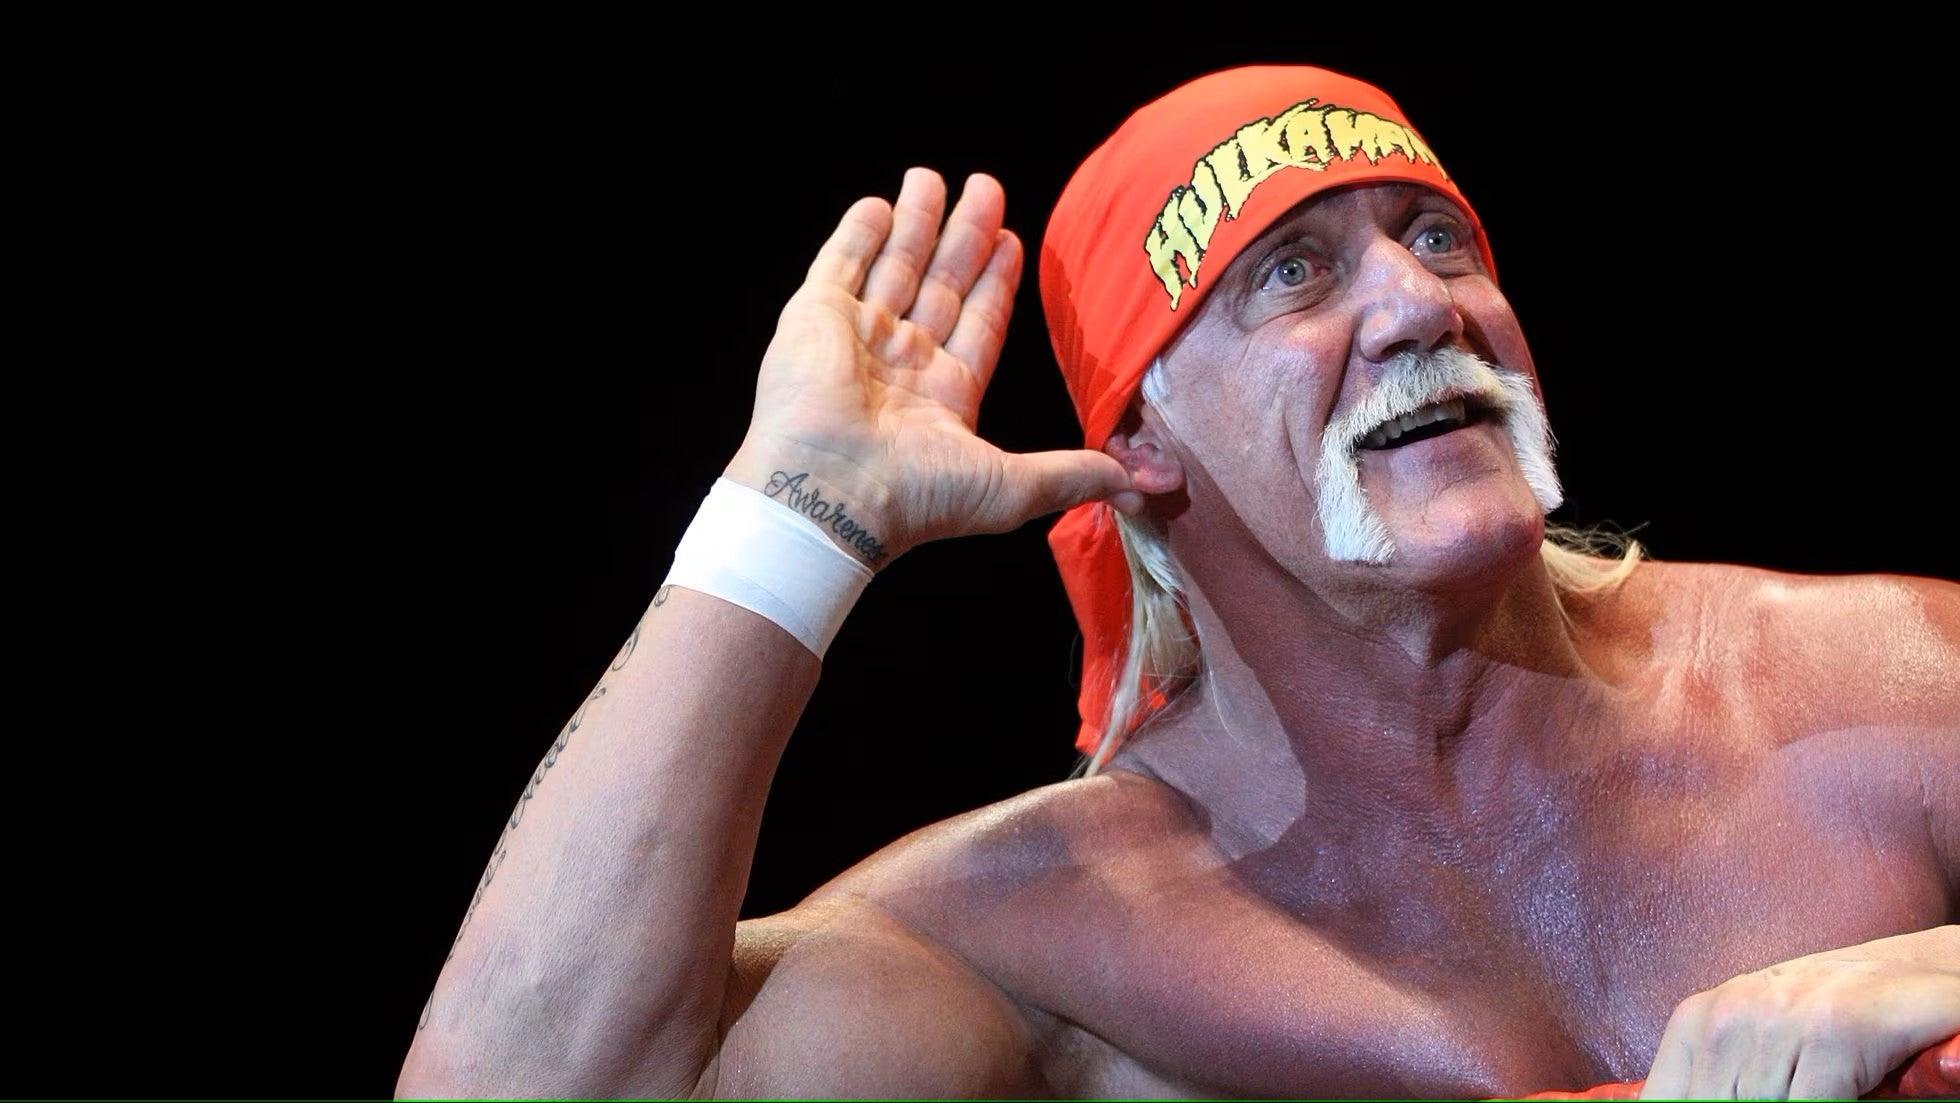 Pop! Sports Illustrated - WWE - Hulk Hogan - #01 - Hobby Champion Inc